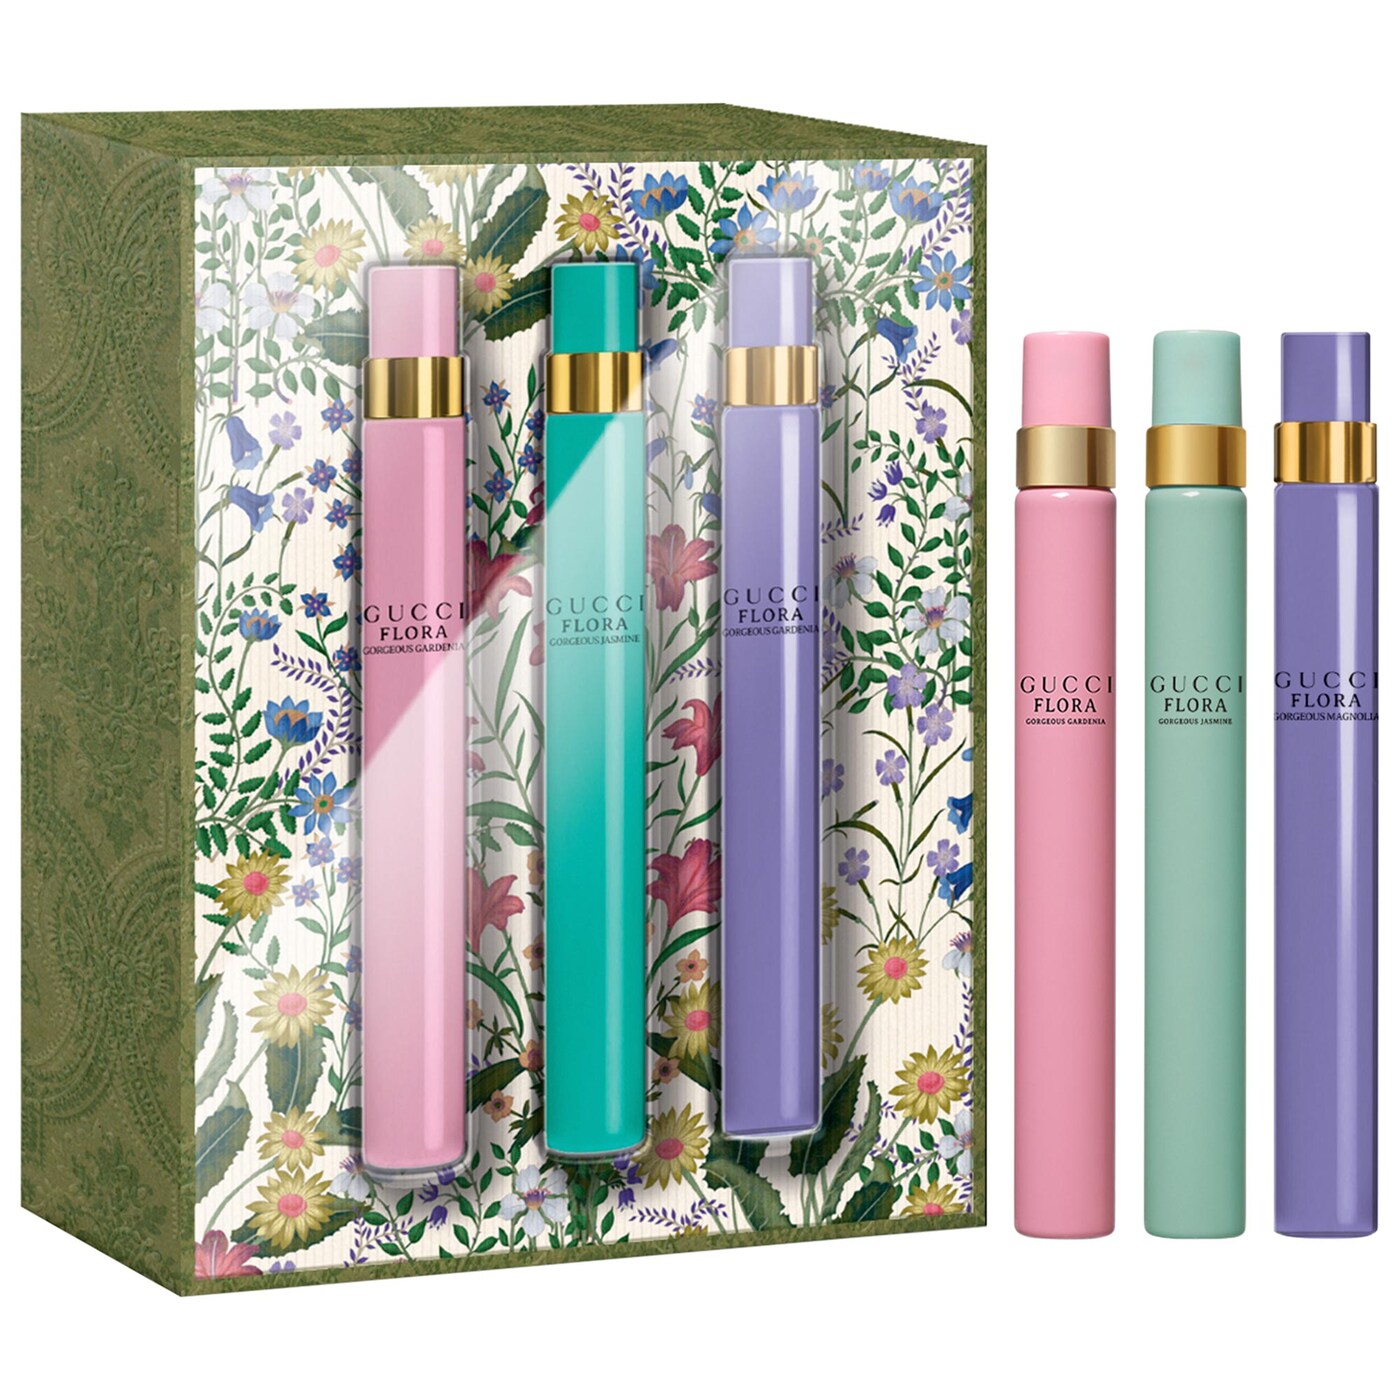 Gucci Flora Gorgeous Travel Spray Perfume Trio Set (Limited Edition)